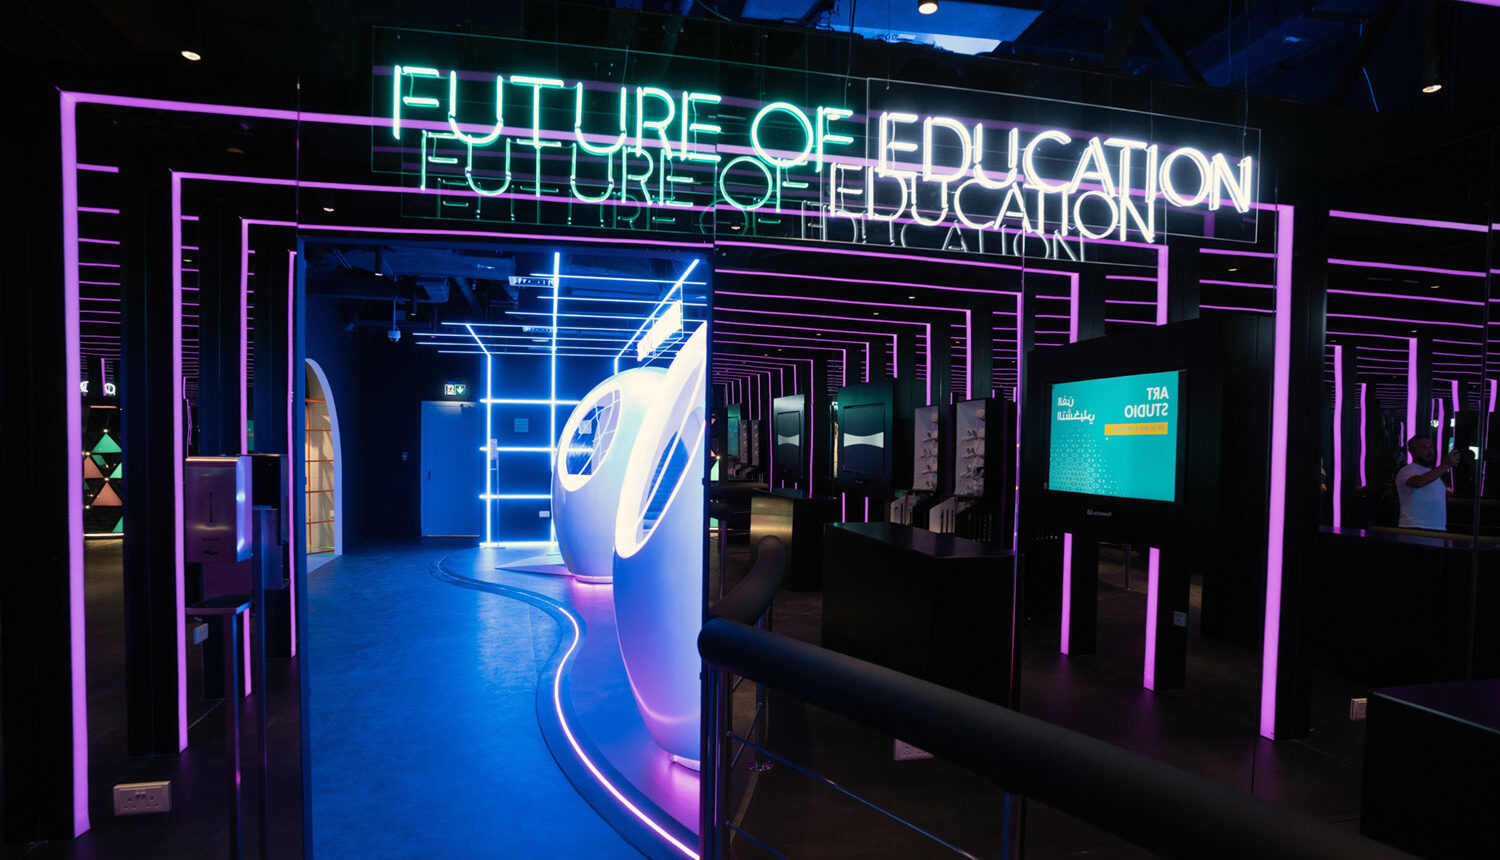 Presenting the future of education at Expo 2020 Dubai